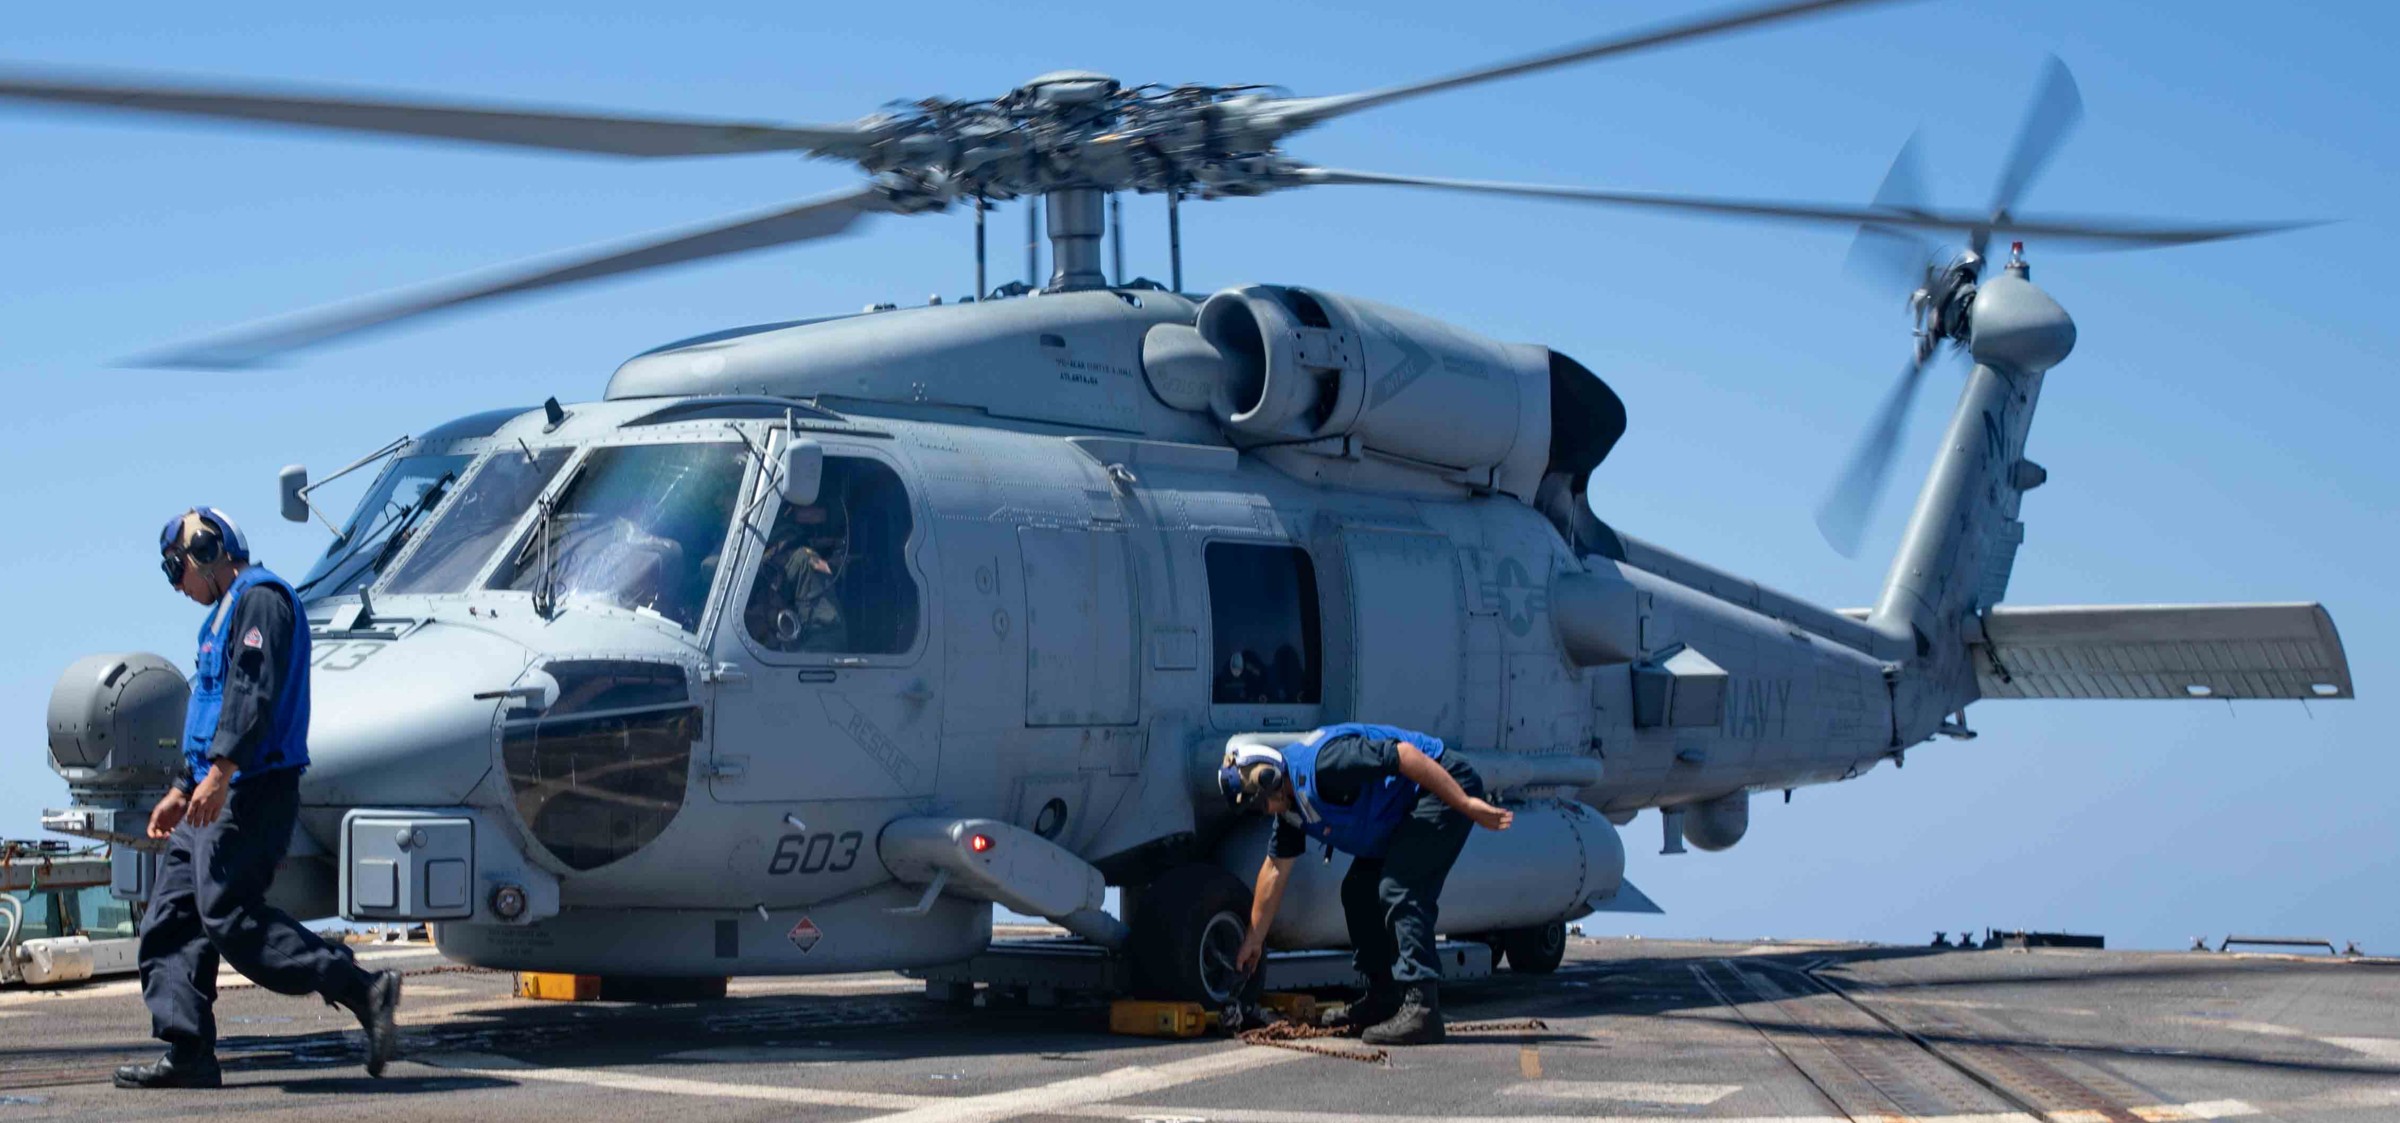 hsm-60 jaguars helicopter maritime strike squadron navy reserve mh-60r seahawk ddg-99 uss farragut 13